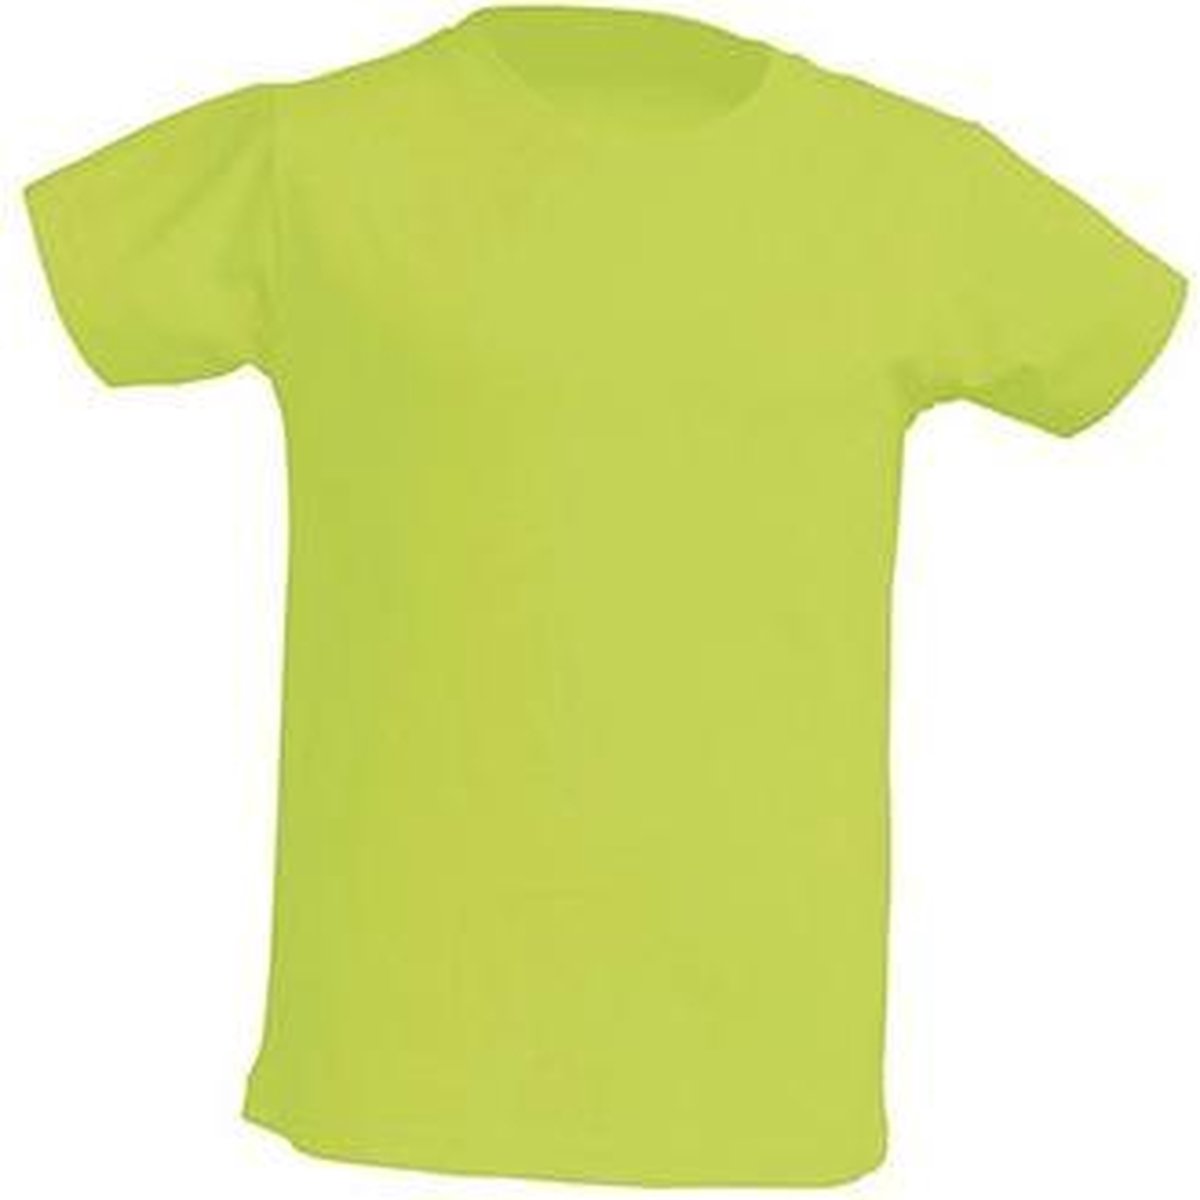 5 pack Kids T-shirt in pistachio-104